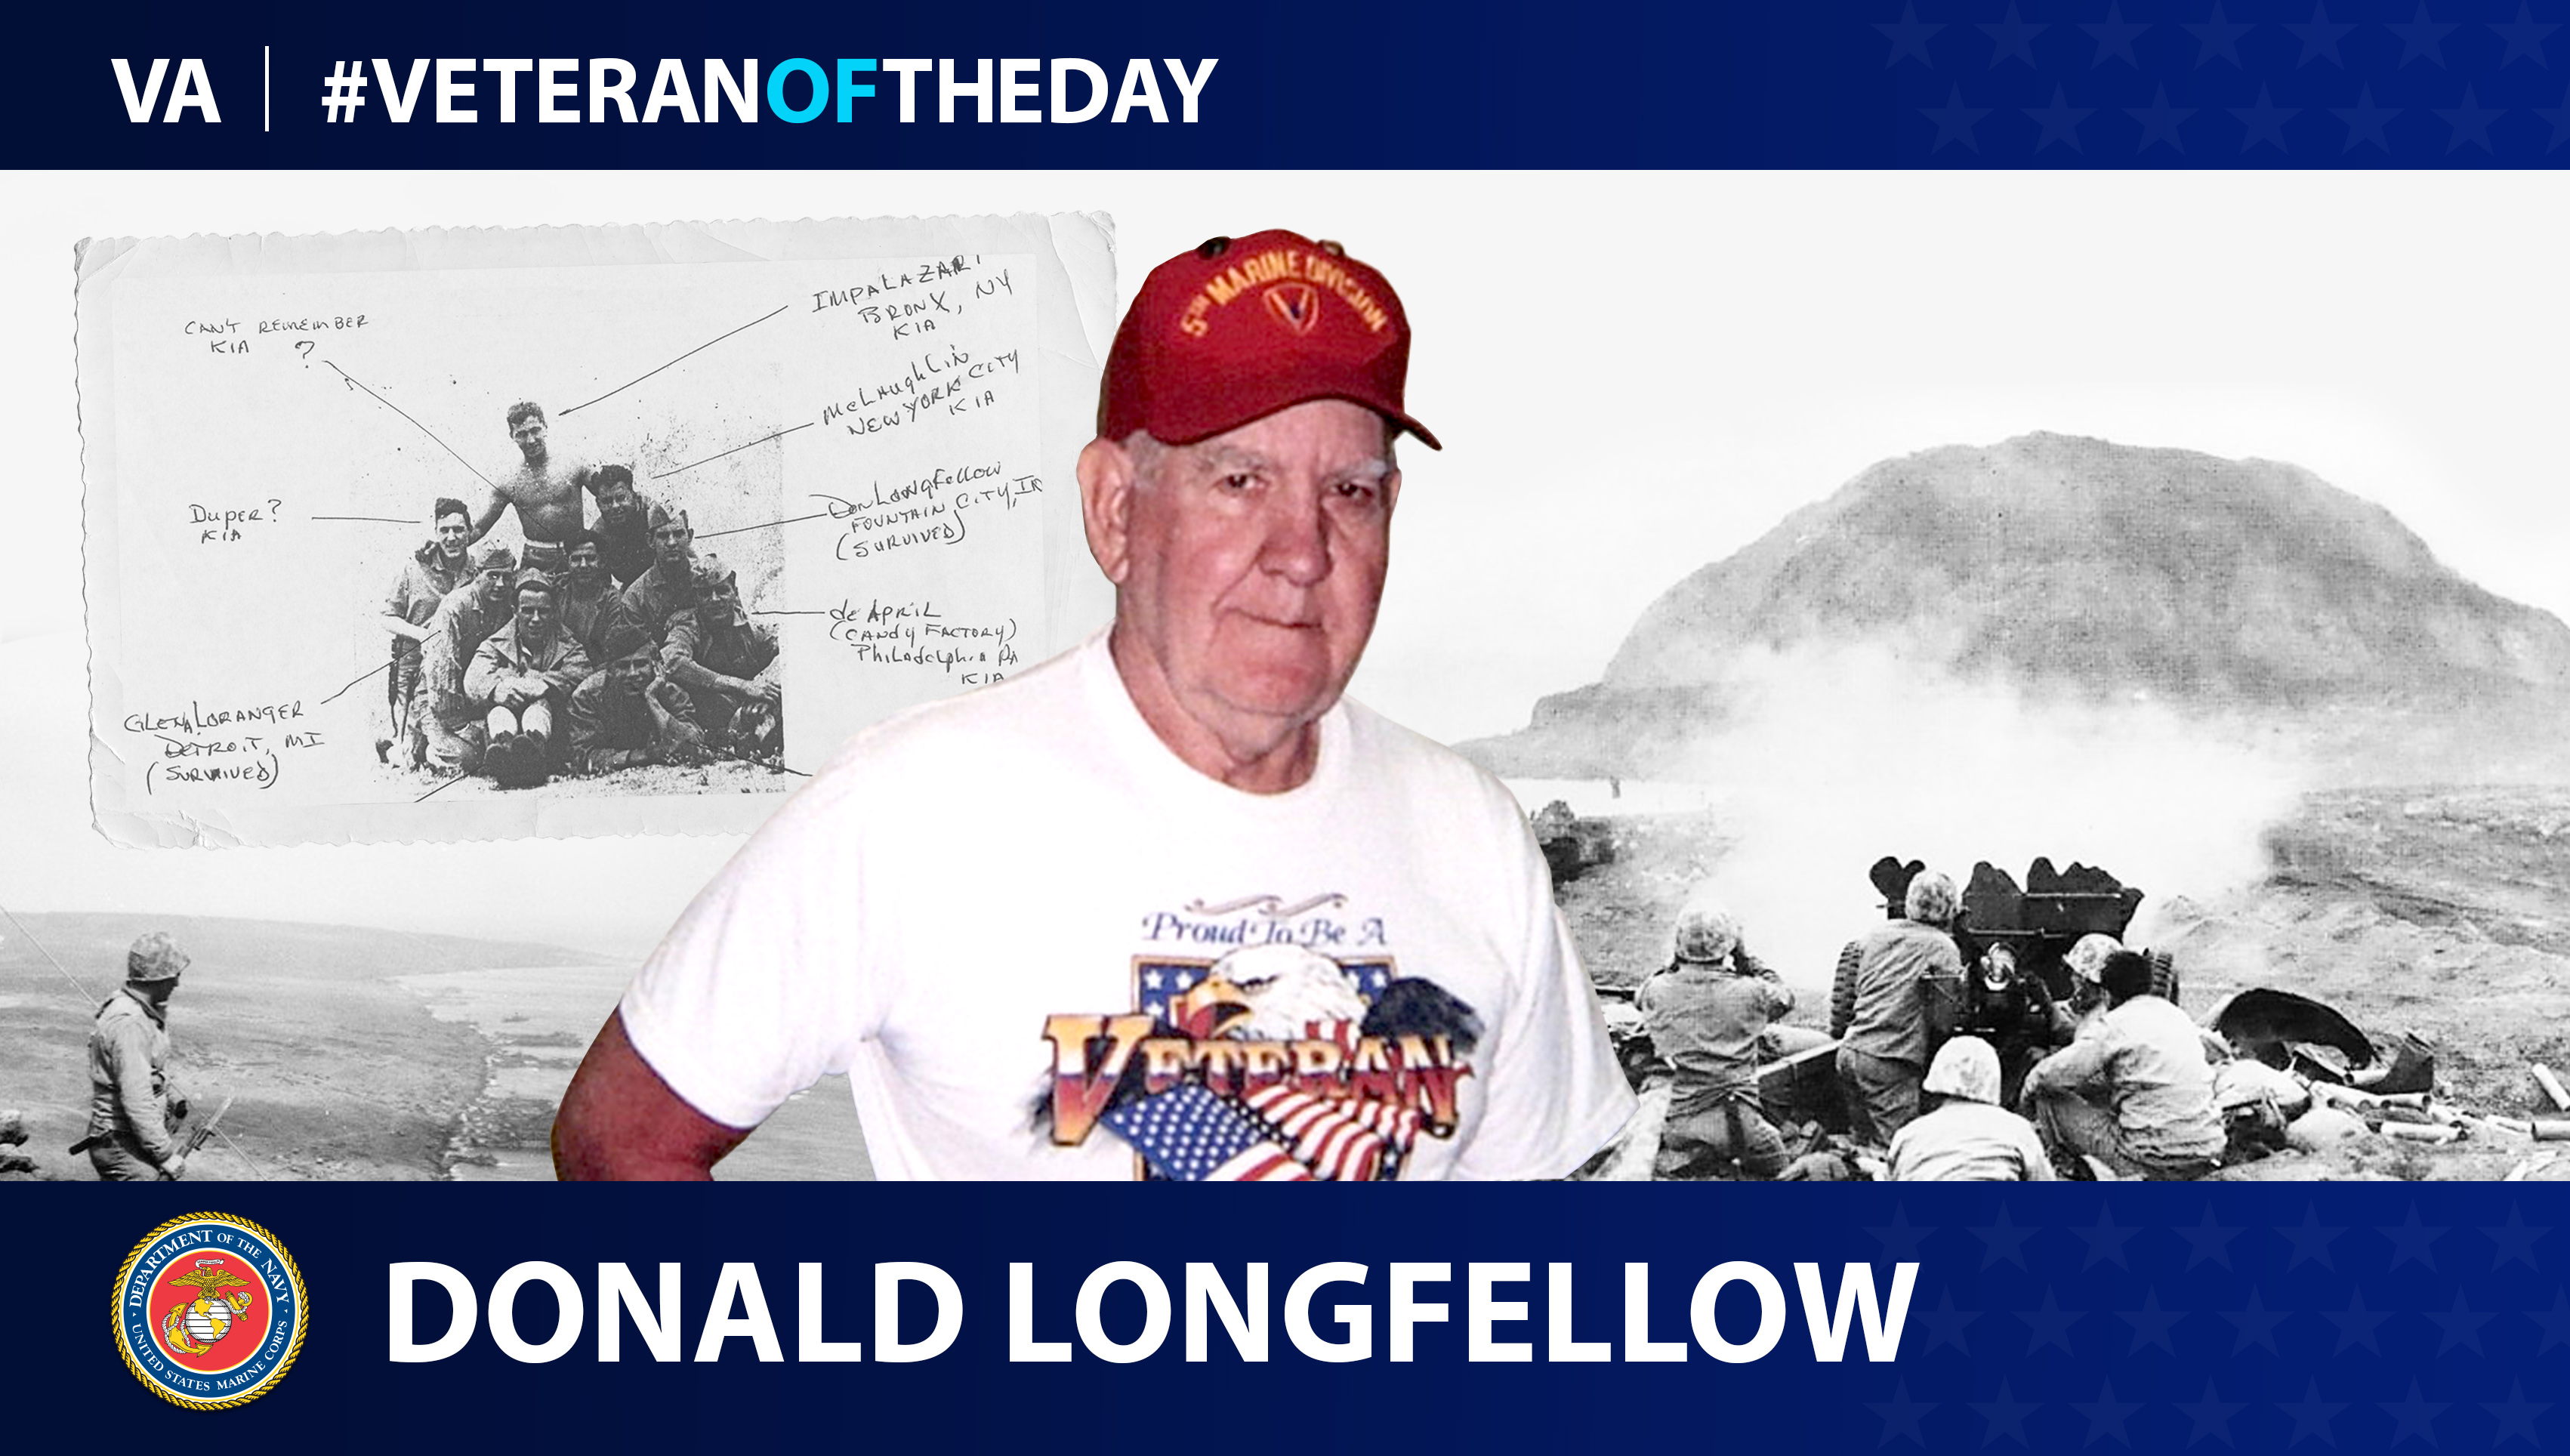 Marine Corps Veteran Donald E. Longfellow is today’s Veteran of the Day.